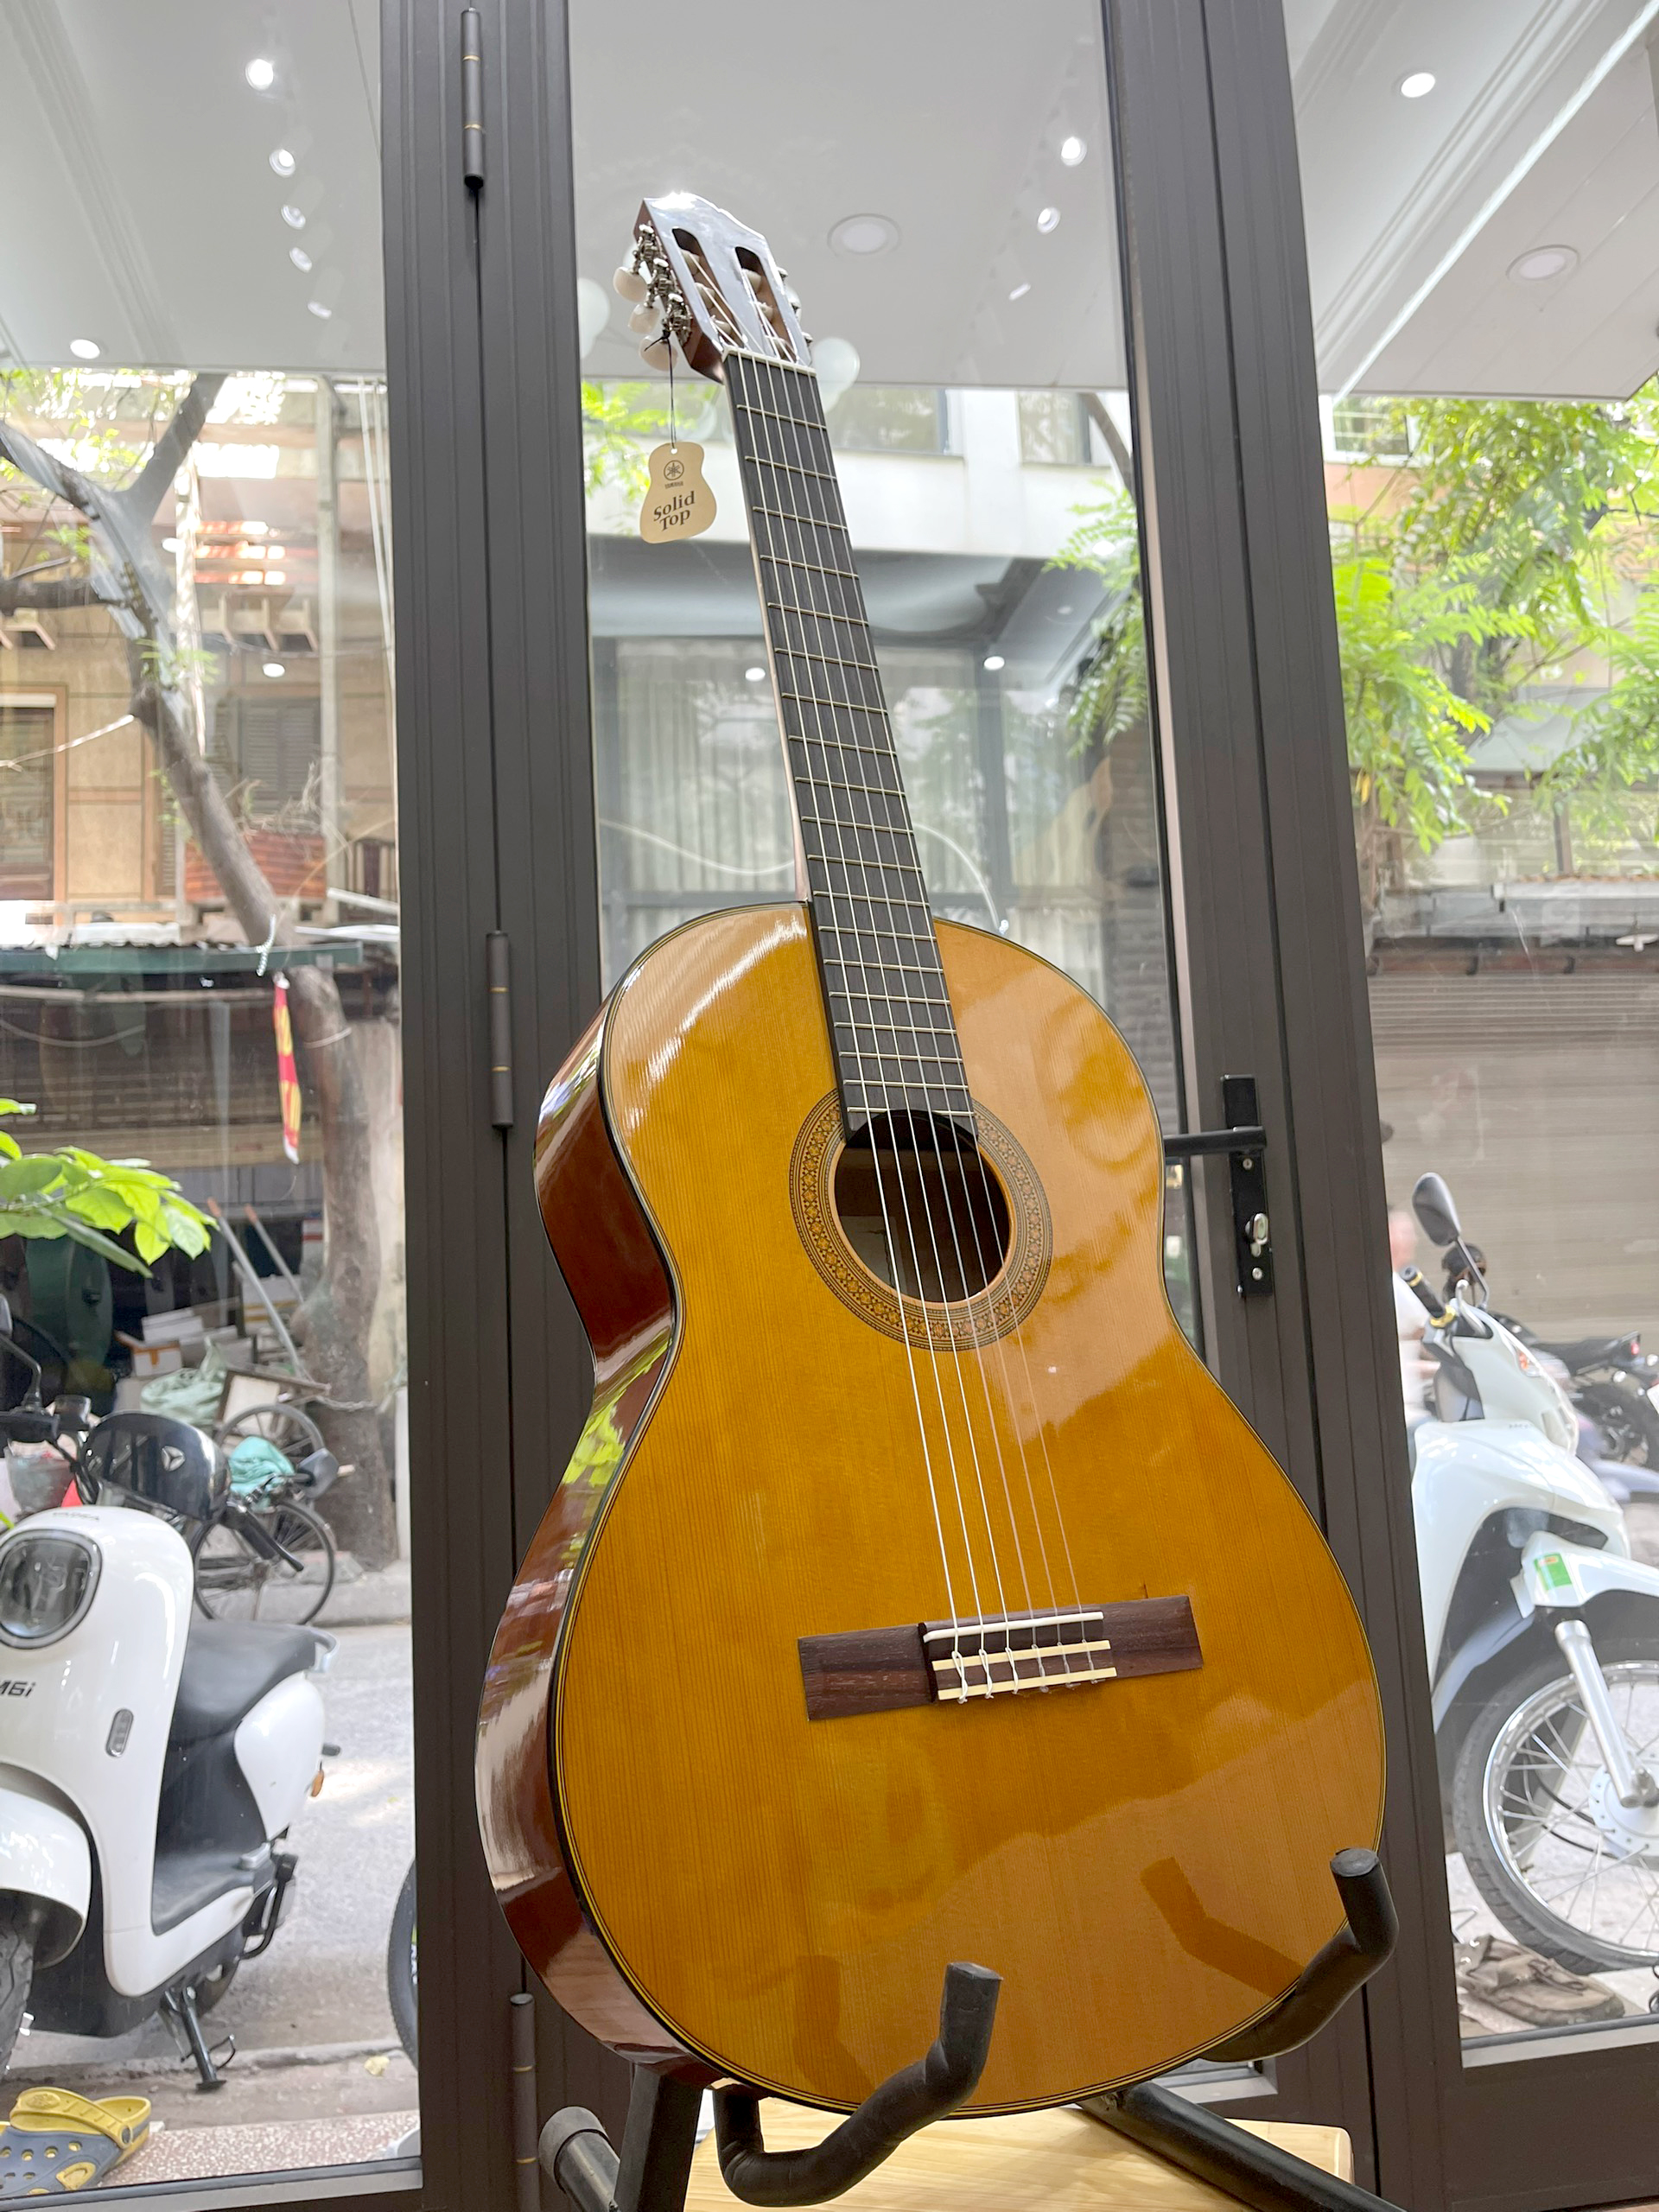 Đàn Guitar Classic Yamaha CG142C